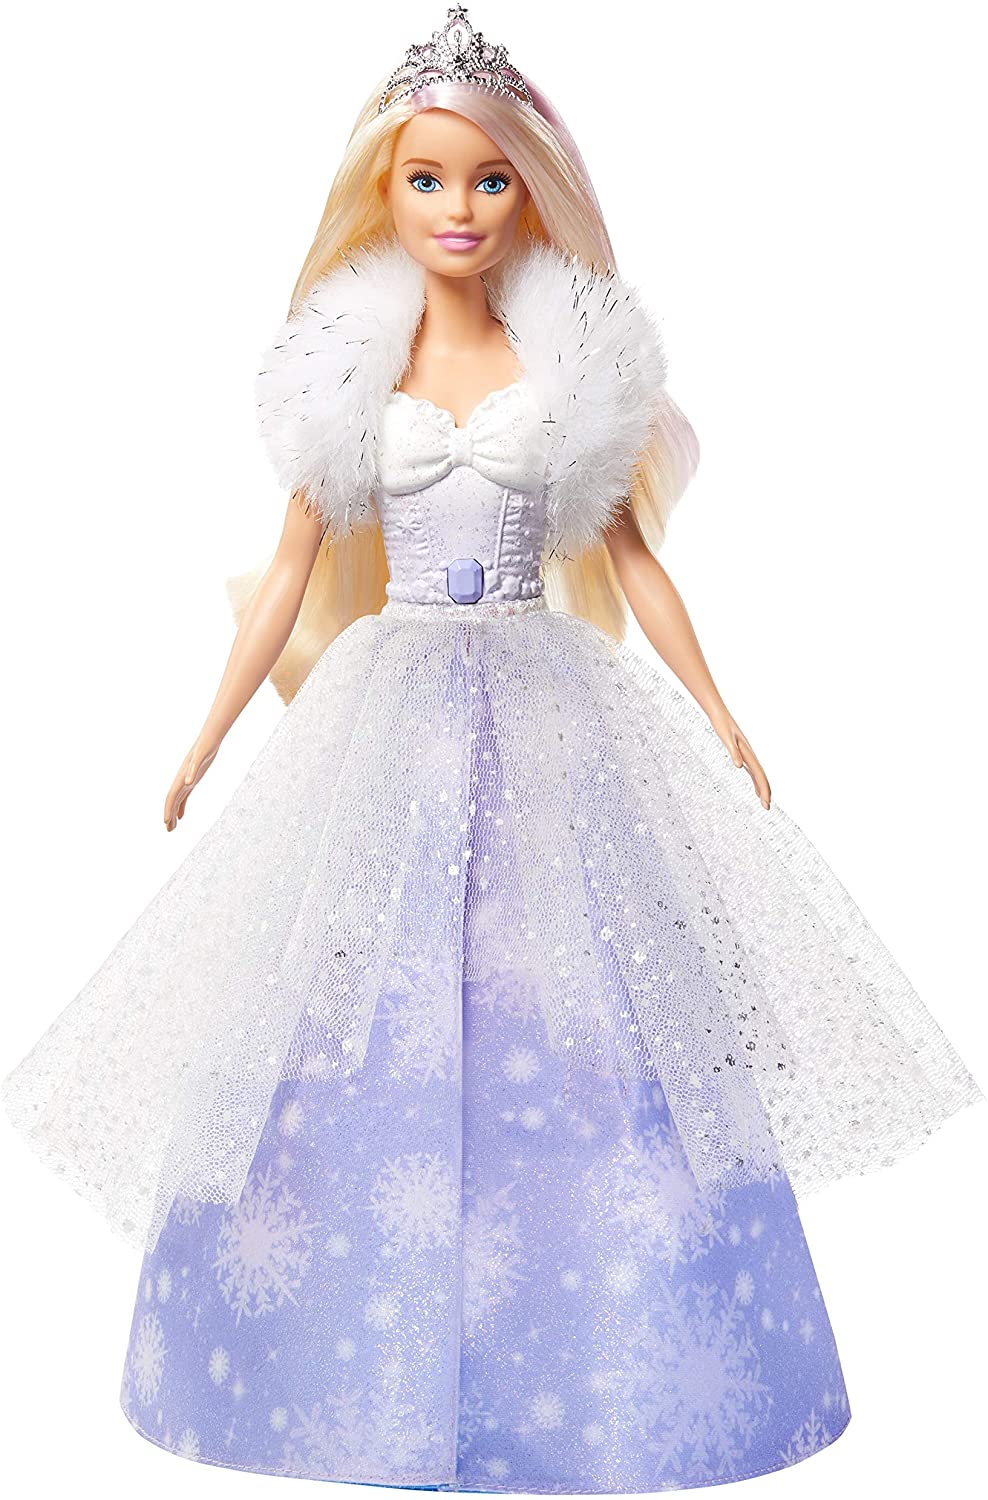 Barbie Princesa Com Vestido Mágico Gkh26 - Mattel